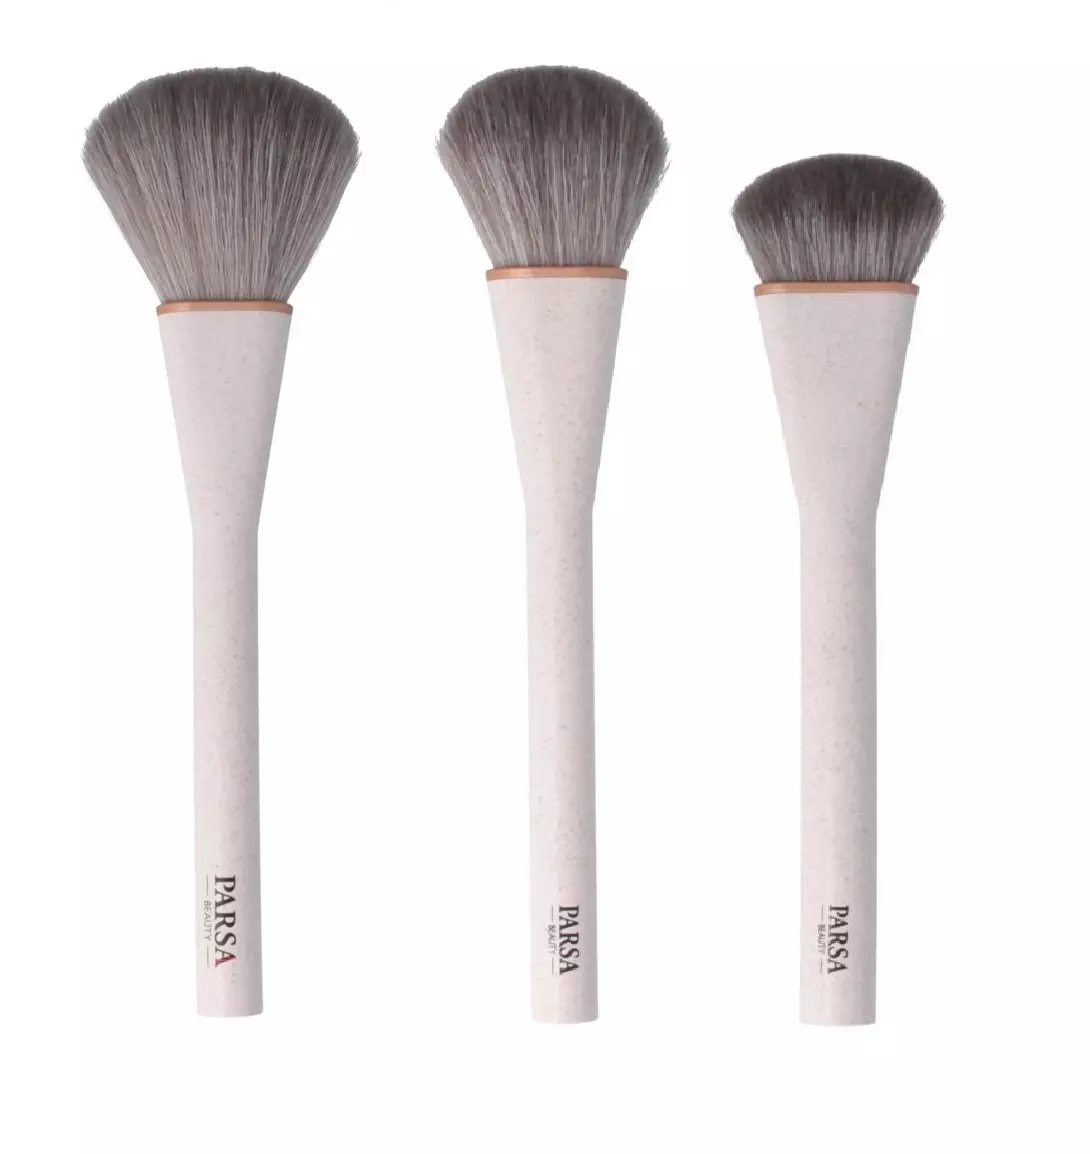 Parsa Beauty Brush Set